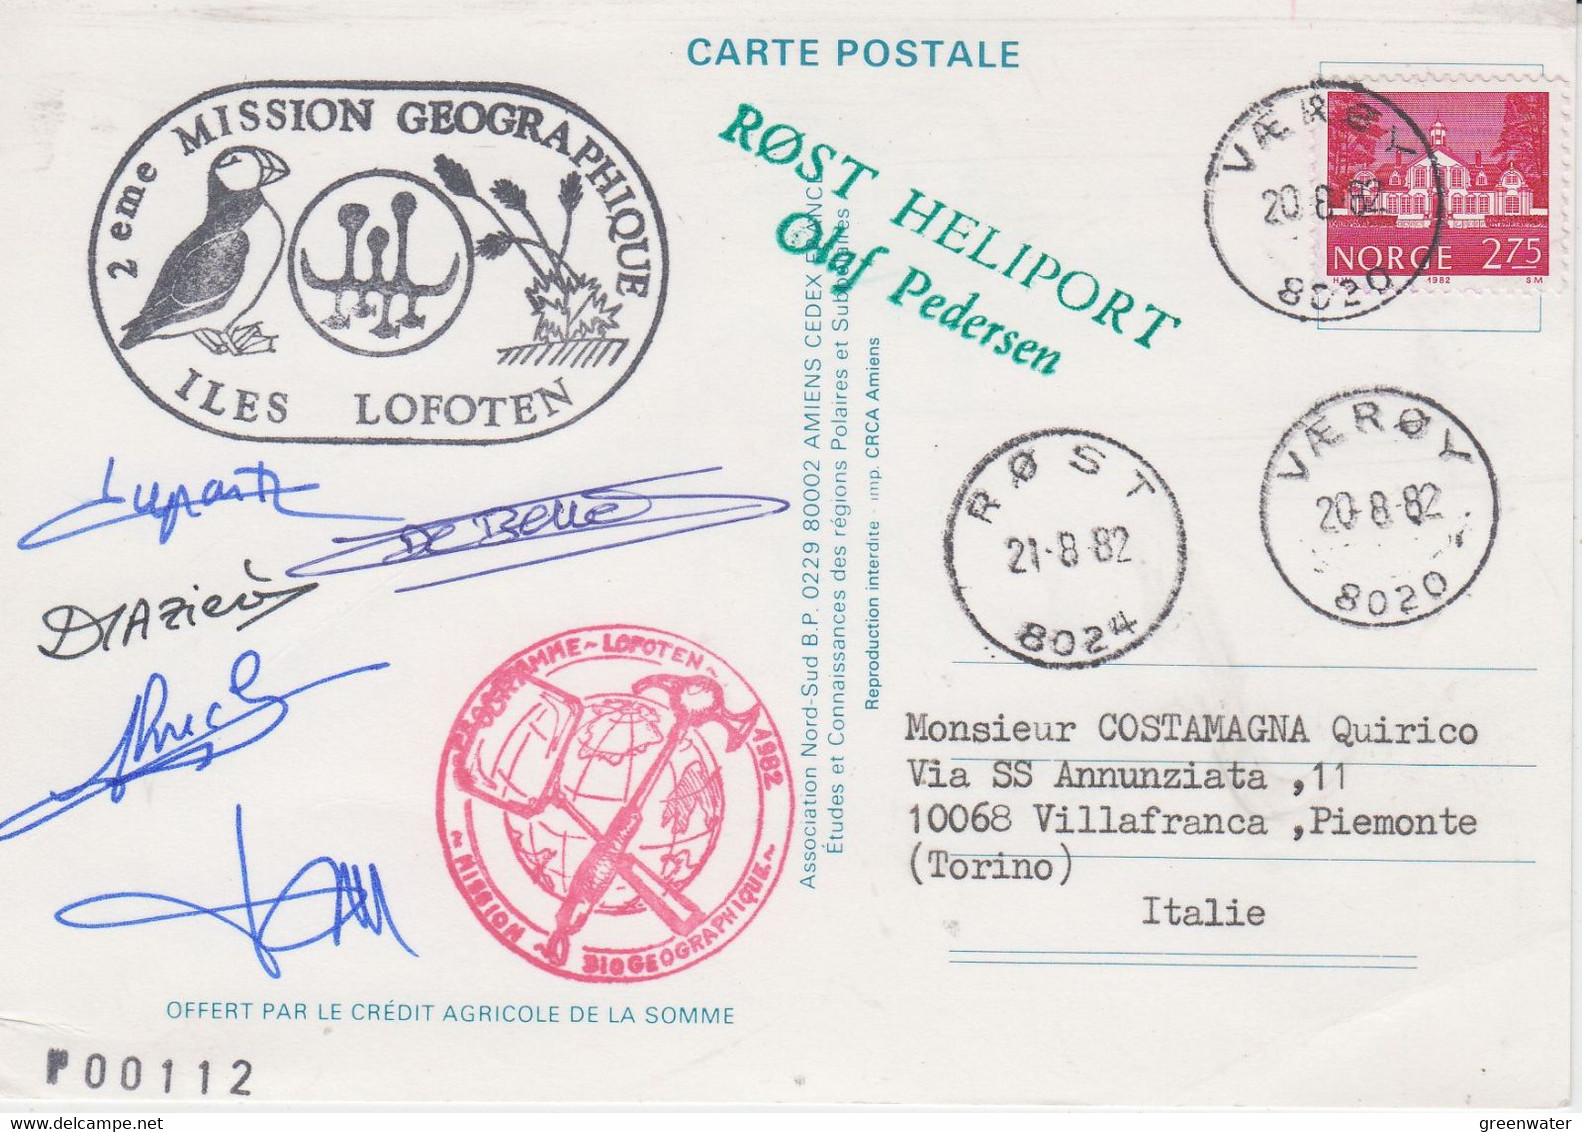 Norway 1982 Postcard Emile Victor  2eme Mission Georgraphique Ca Rost Heliport  5 Signatuires Ca Varoy 20-8-1982 (NW200) - Programmi Di Ricerca